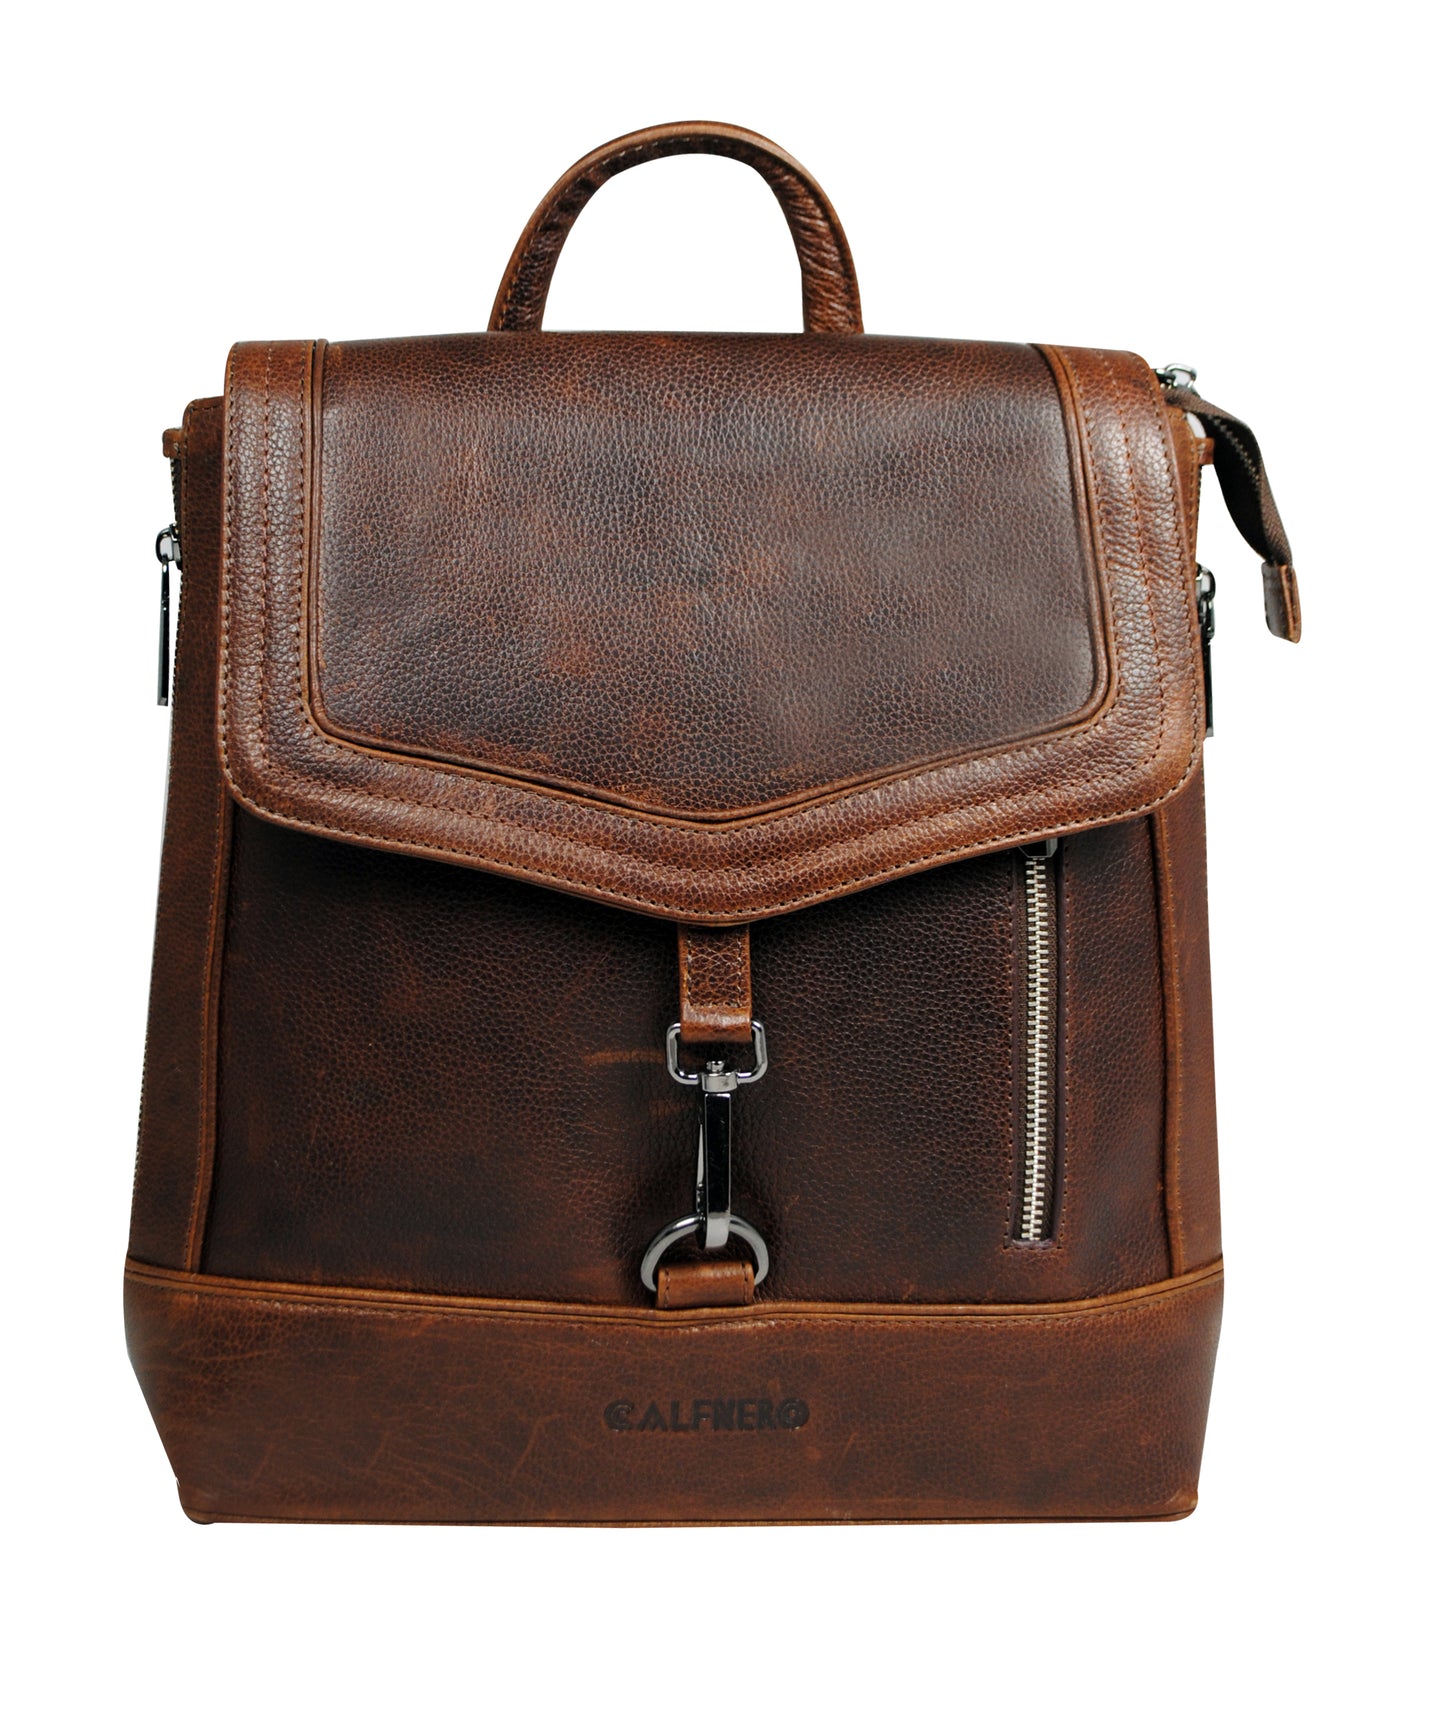 Calfnero Genuine Leather Women's Backpack (931-Brown)